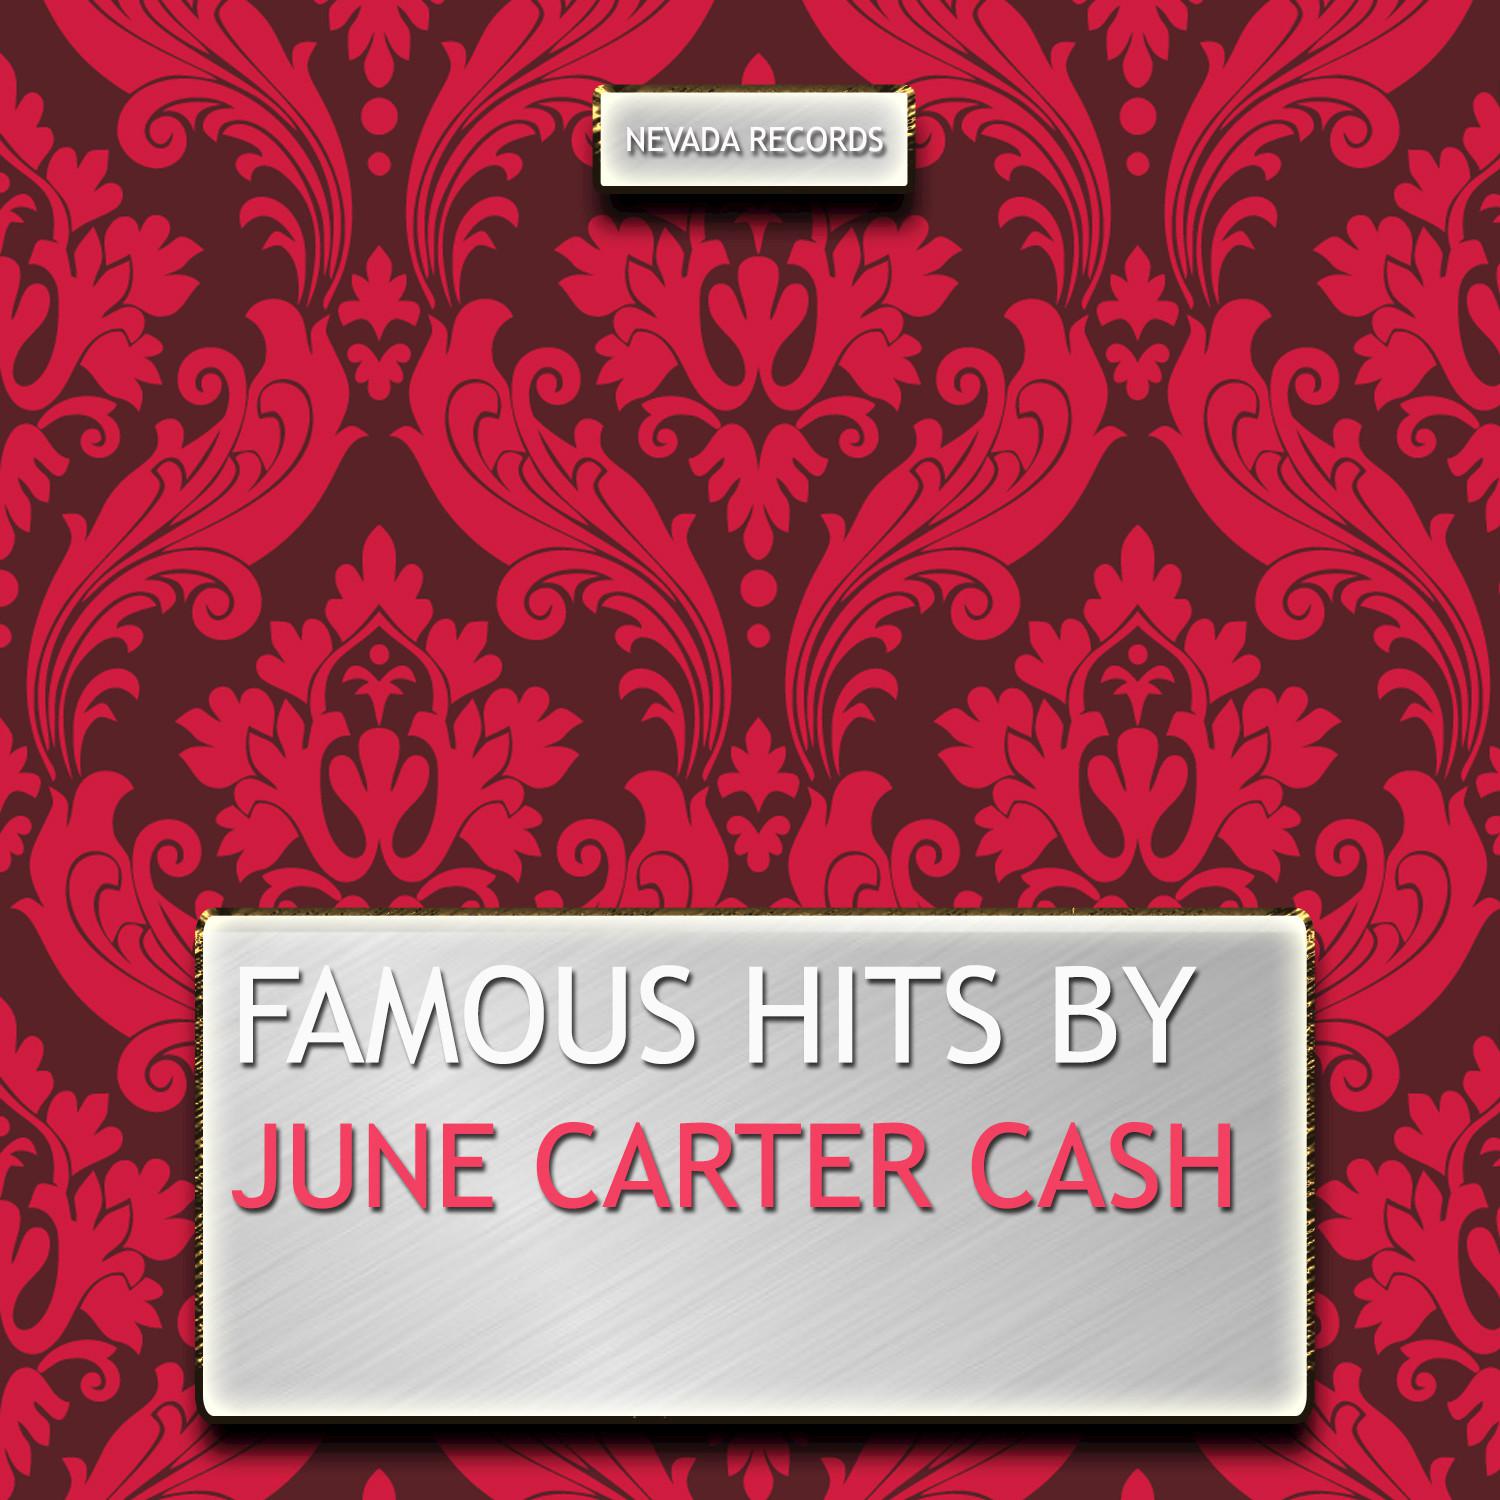 Famous Hits By June Carter Cash